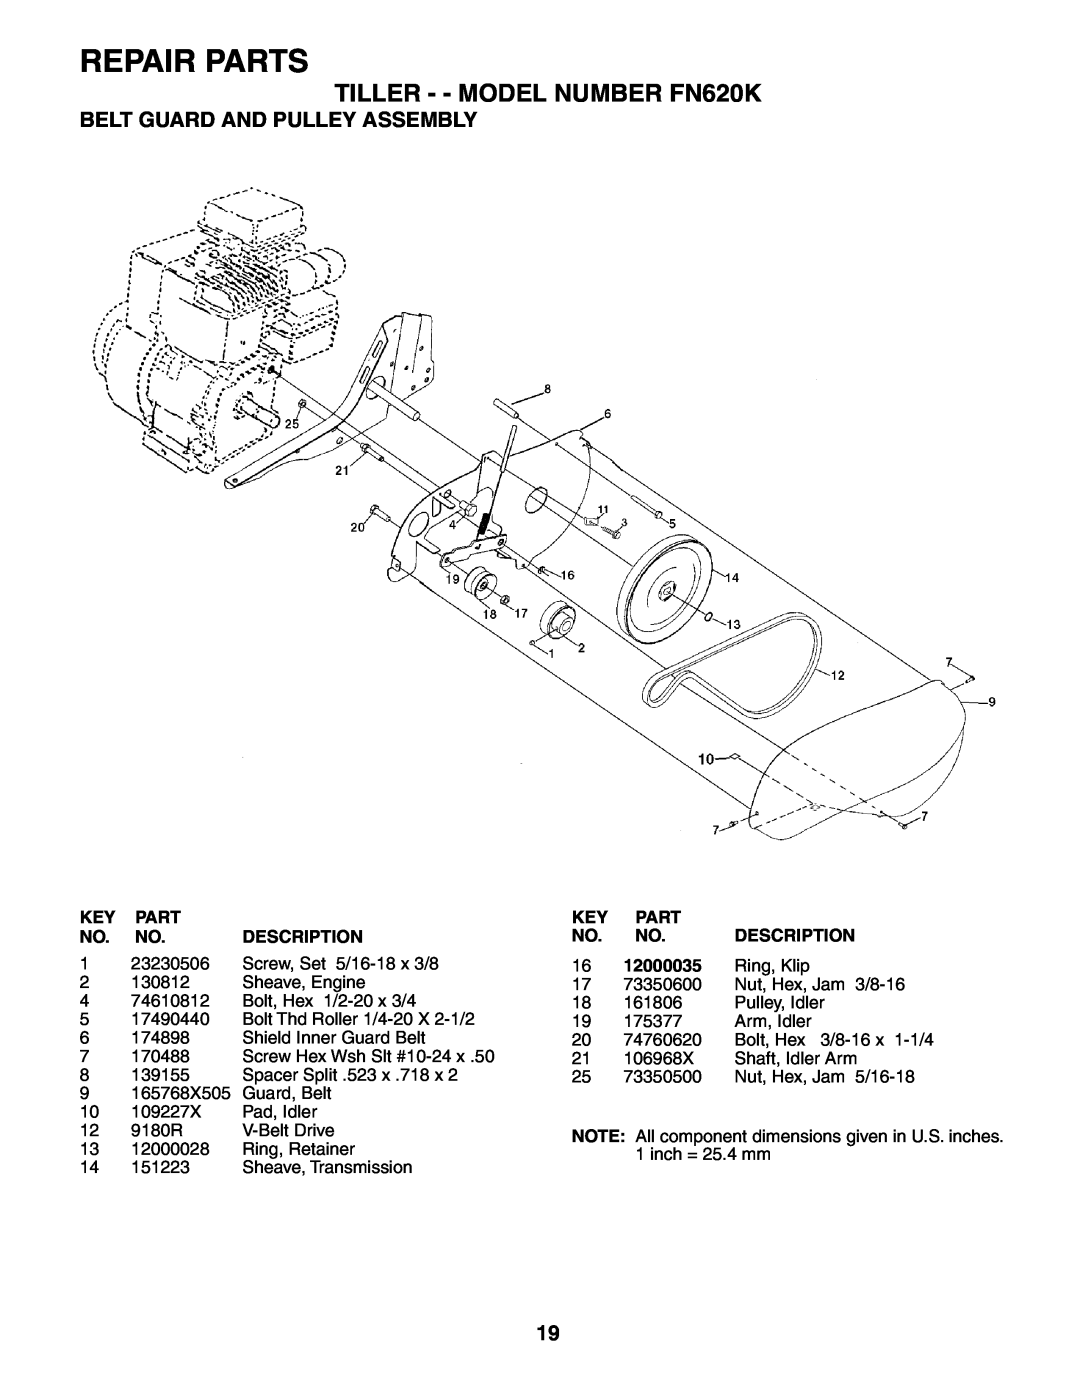 Electrolux Belt Guard And Pulley Assembly, Repair Parts, TILLER - - MODEL NUMBER FN620K, Key Part No. No. Description 